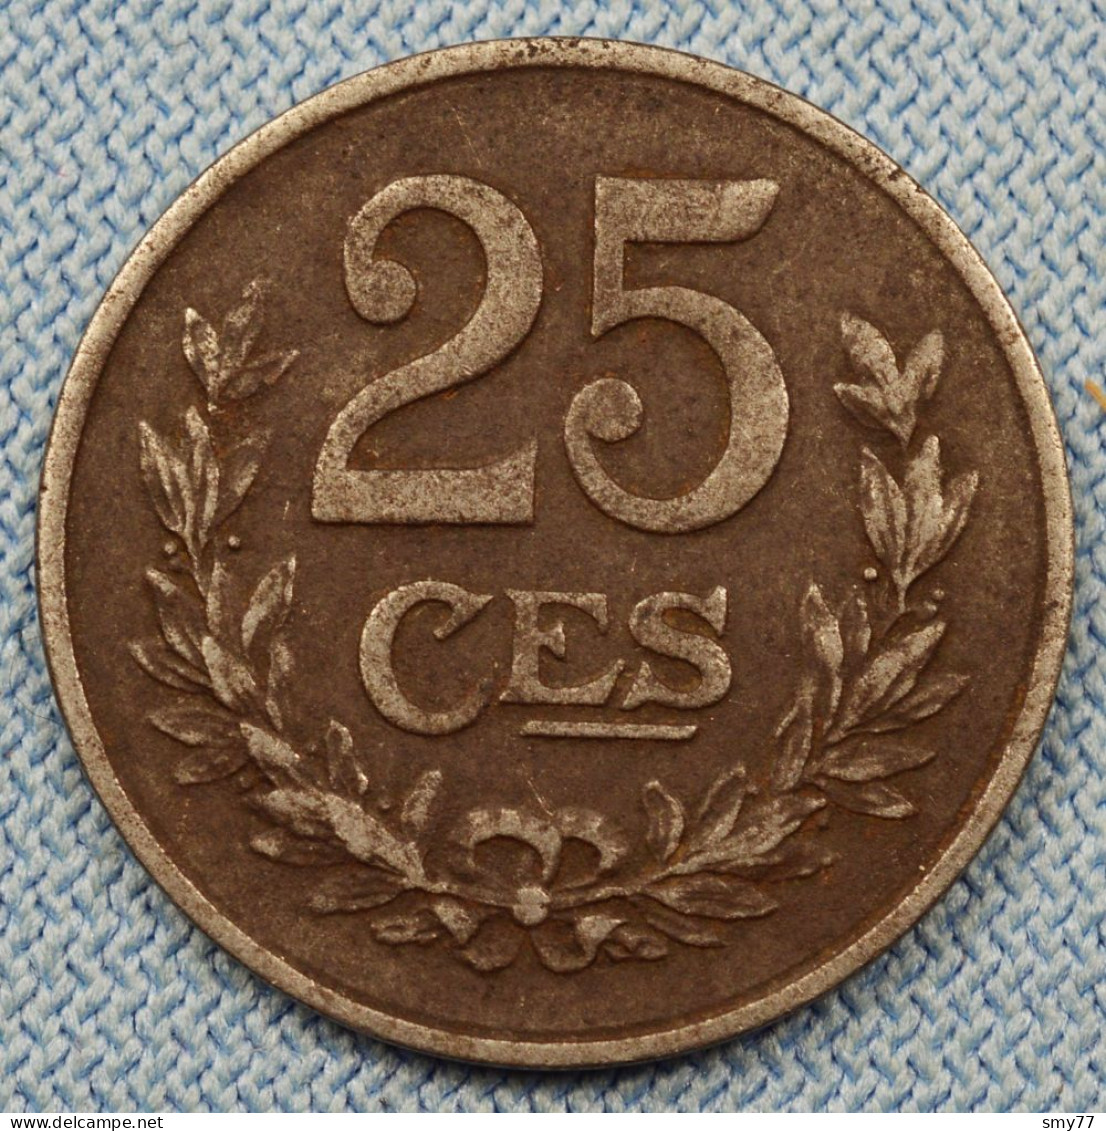 Luxembourg • 25 Centimes 1919 •  Charlotte •  Luxemburg / Fer / Iron •  [24-688] - Lussemburgo